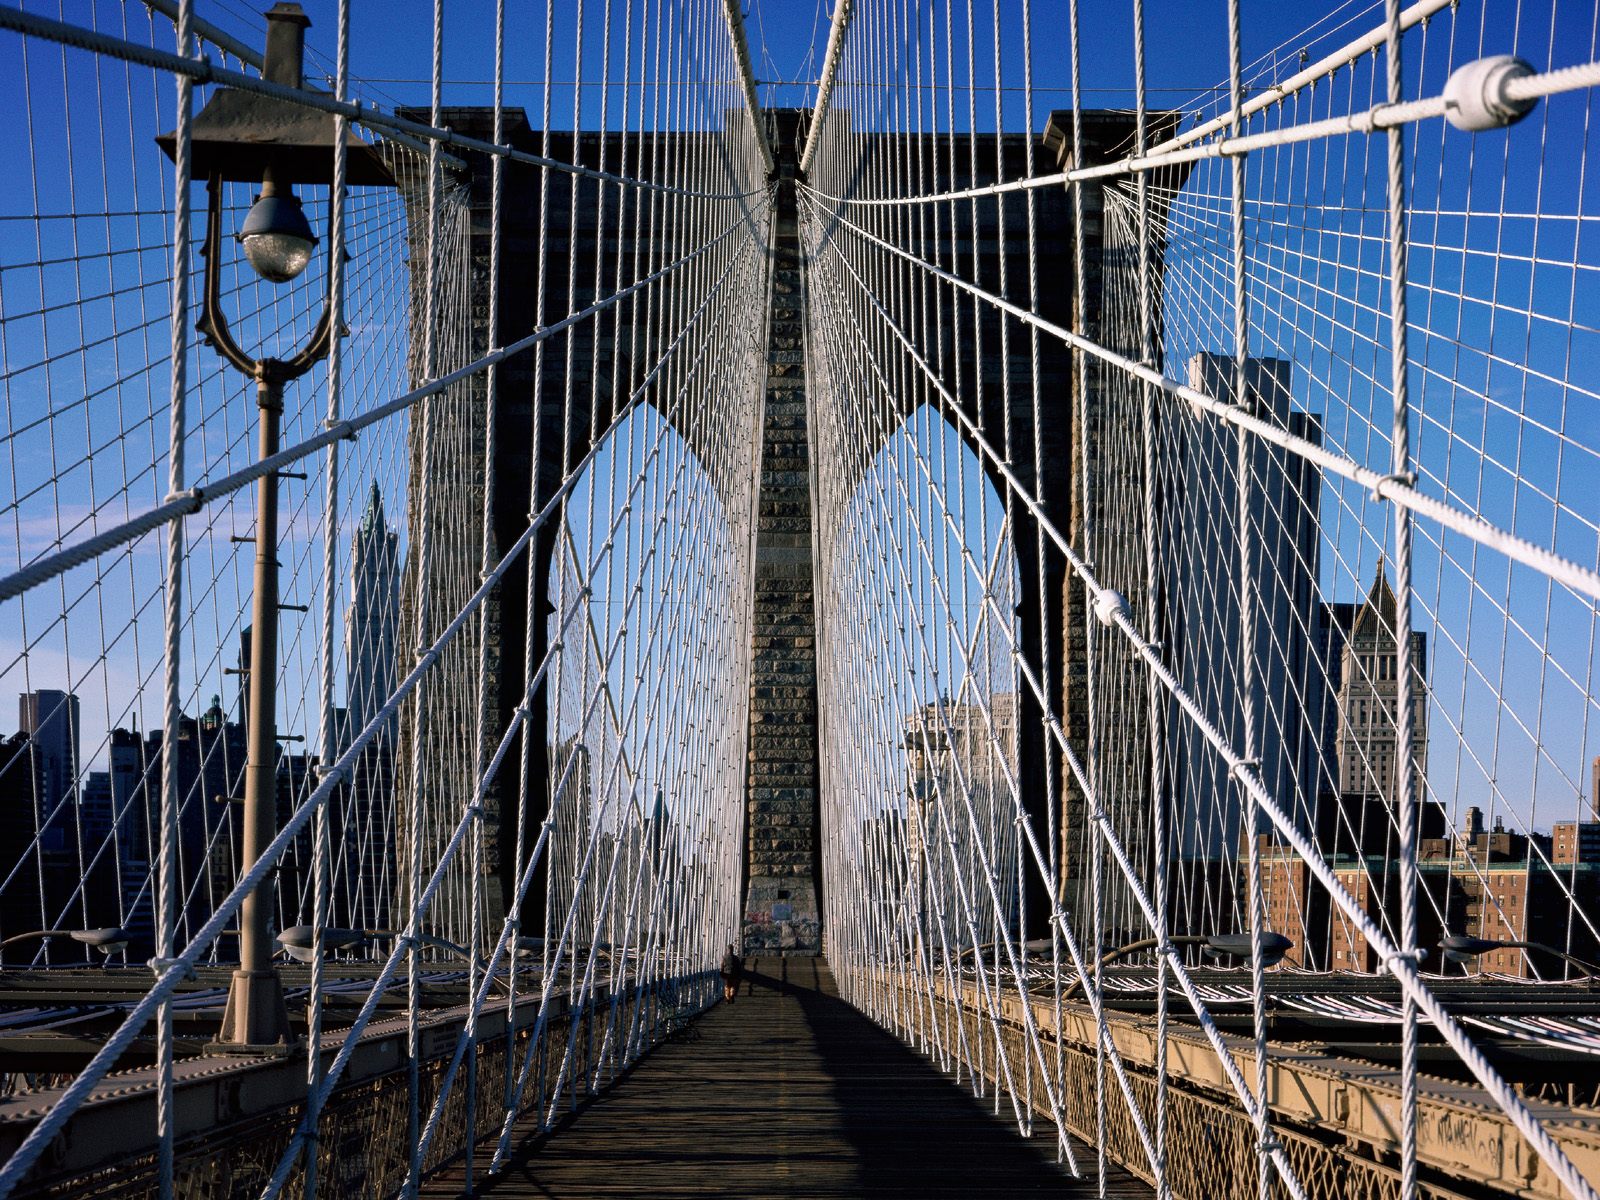 Brooklyn Bridge, New York City, New York - 1600x1200 - ID 41997 - PREMIUM